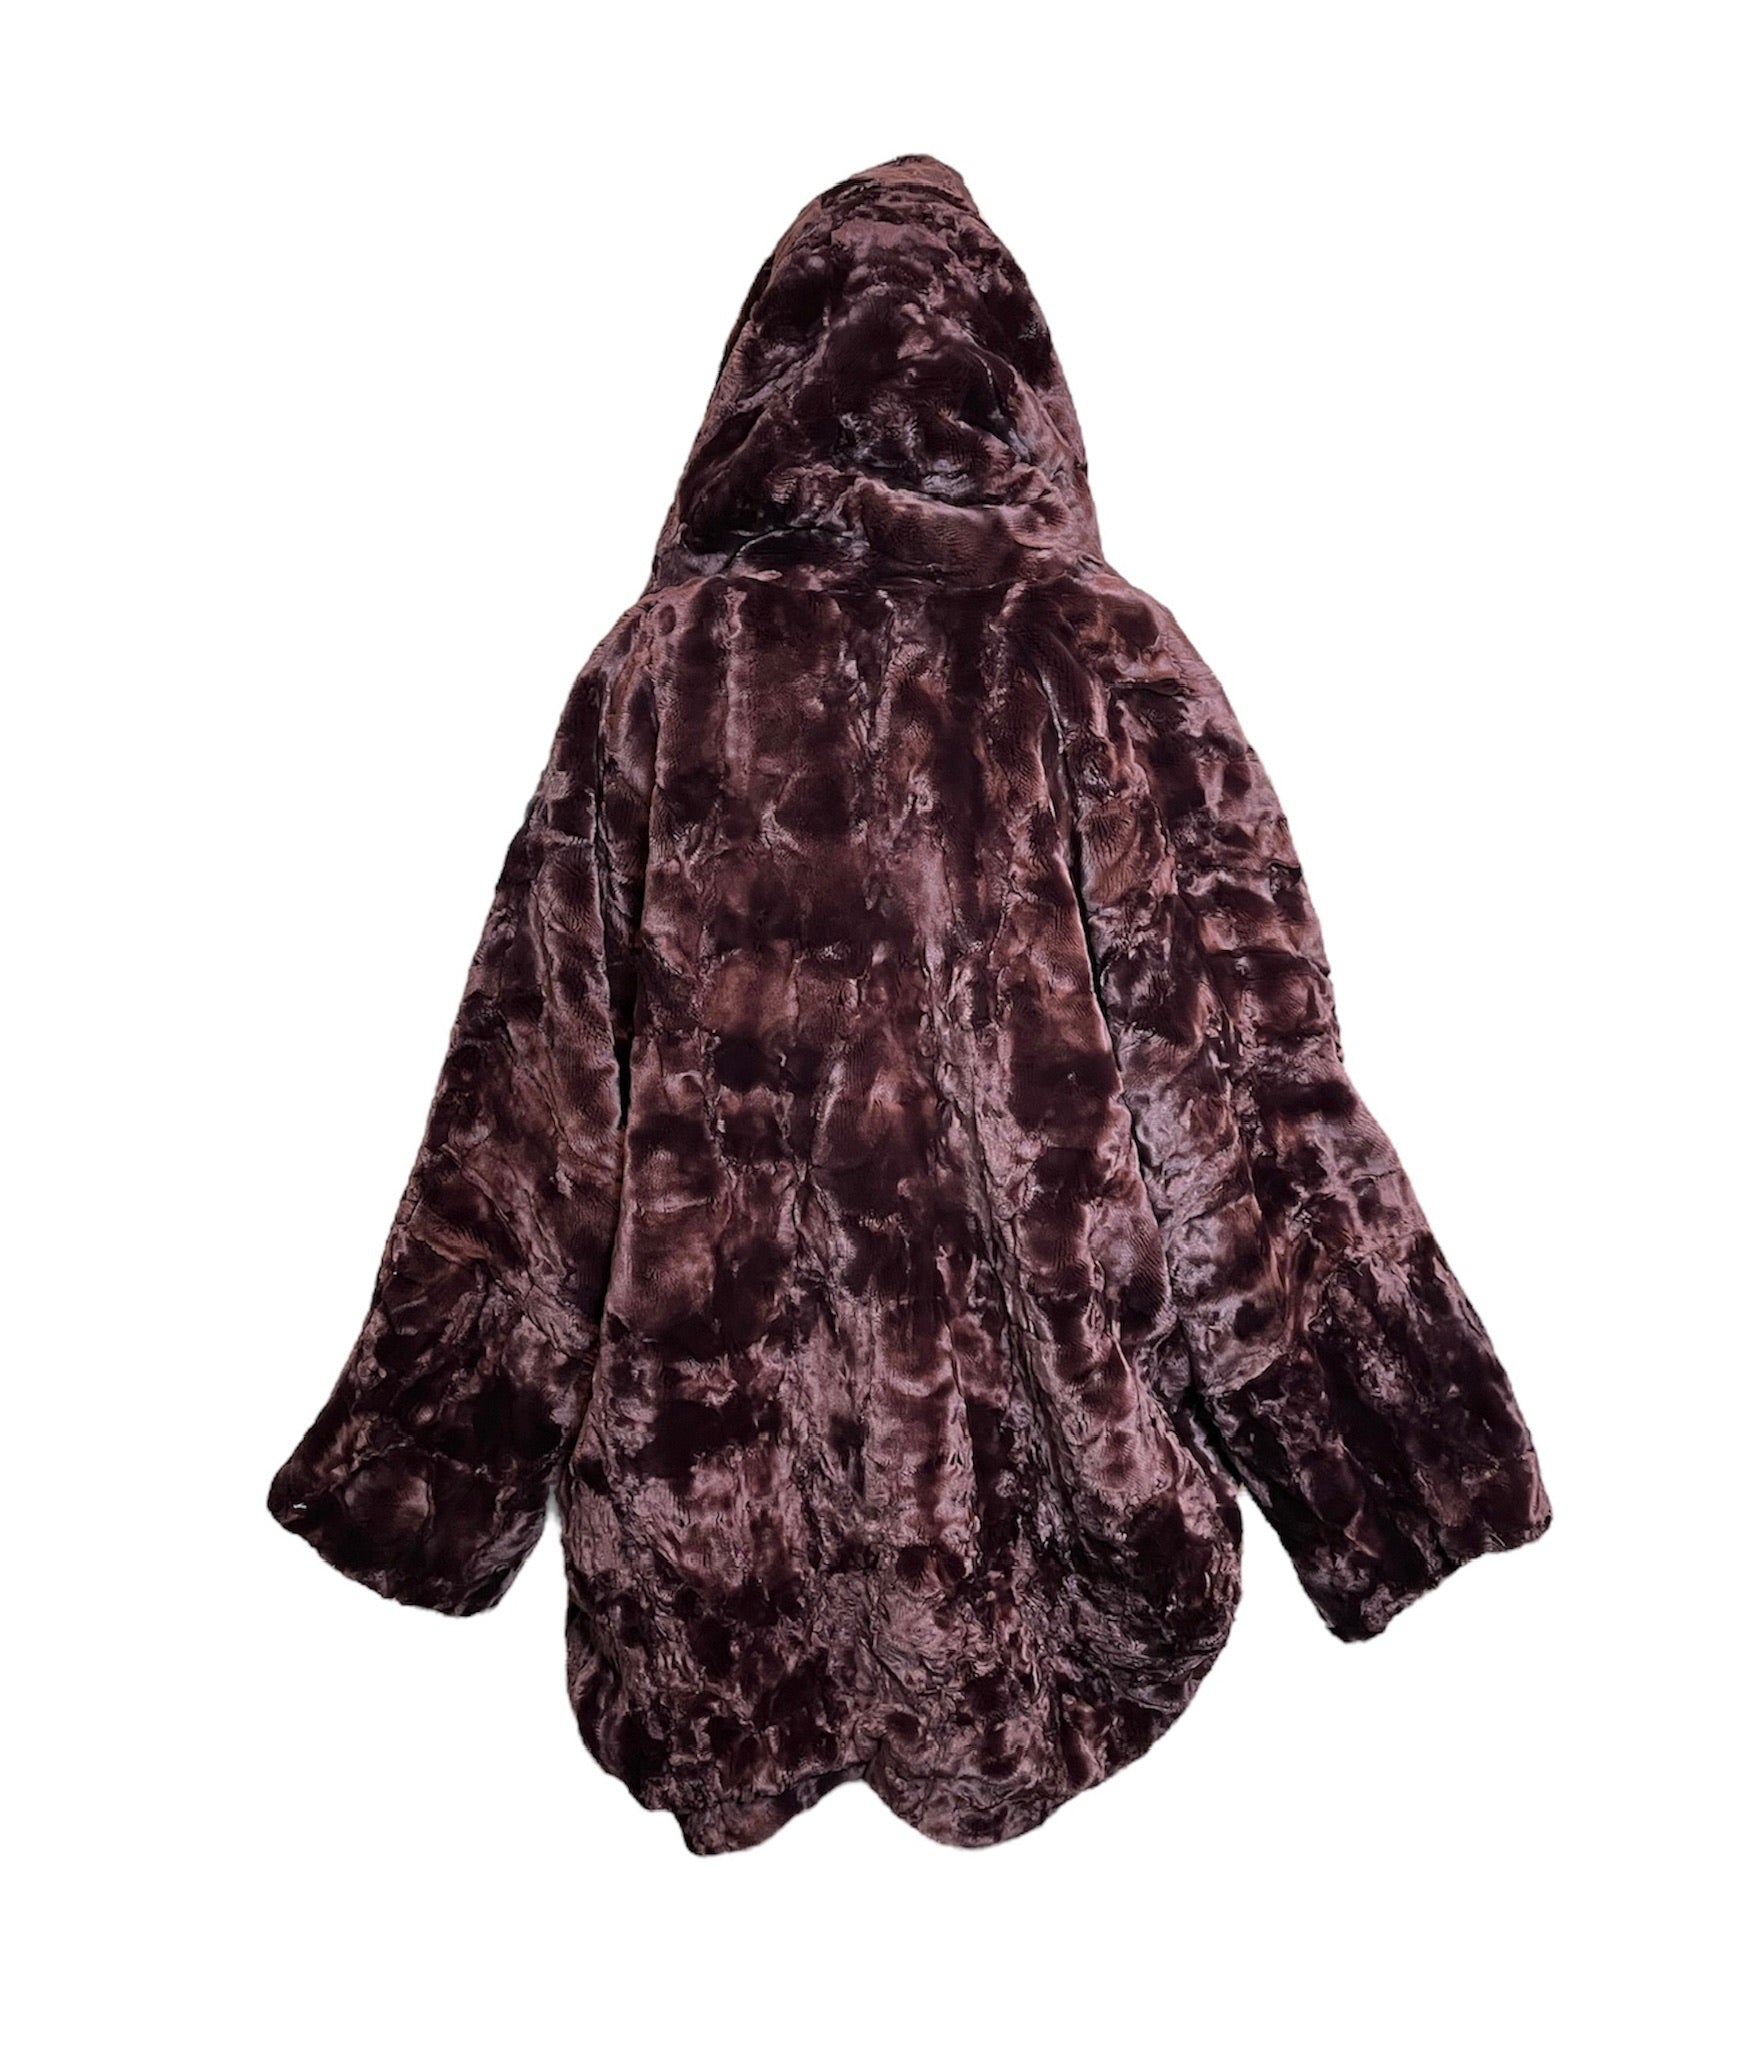 Unlabeled Burgundy Plush  Faux Fur Coat, Back with Hood Up  Burgundy Oversized  Plush  Faux Fur Coat with Convertable Shawl Collar/Hood  HOOD U P BACK 4 of 5